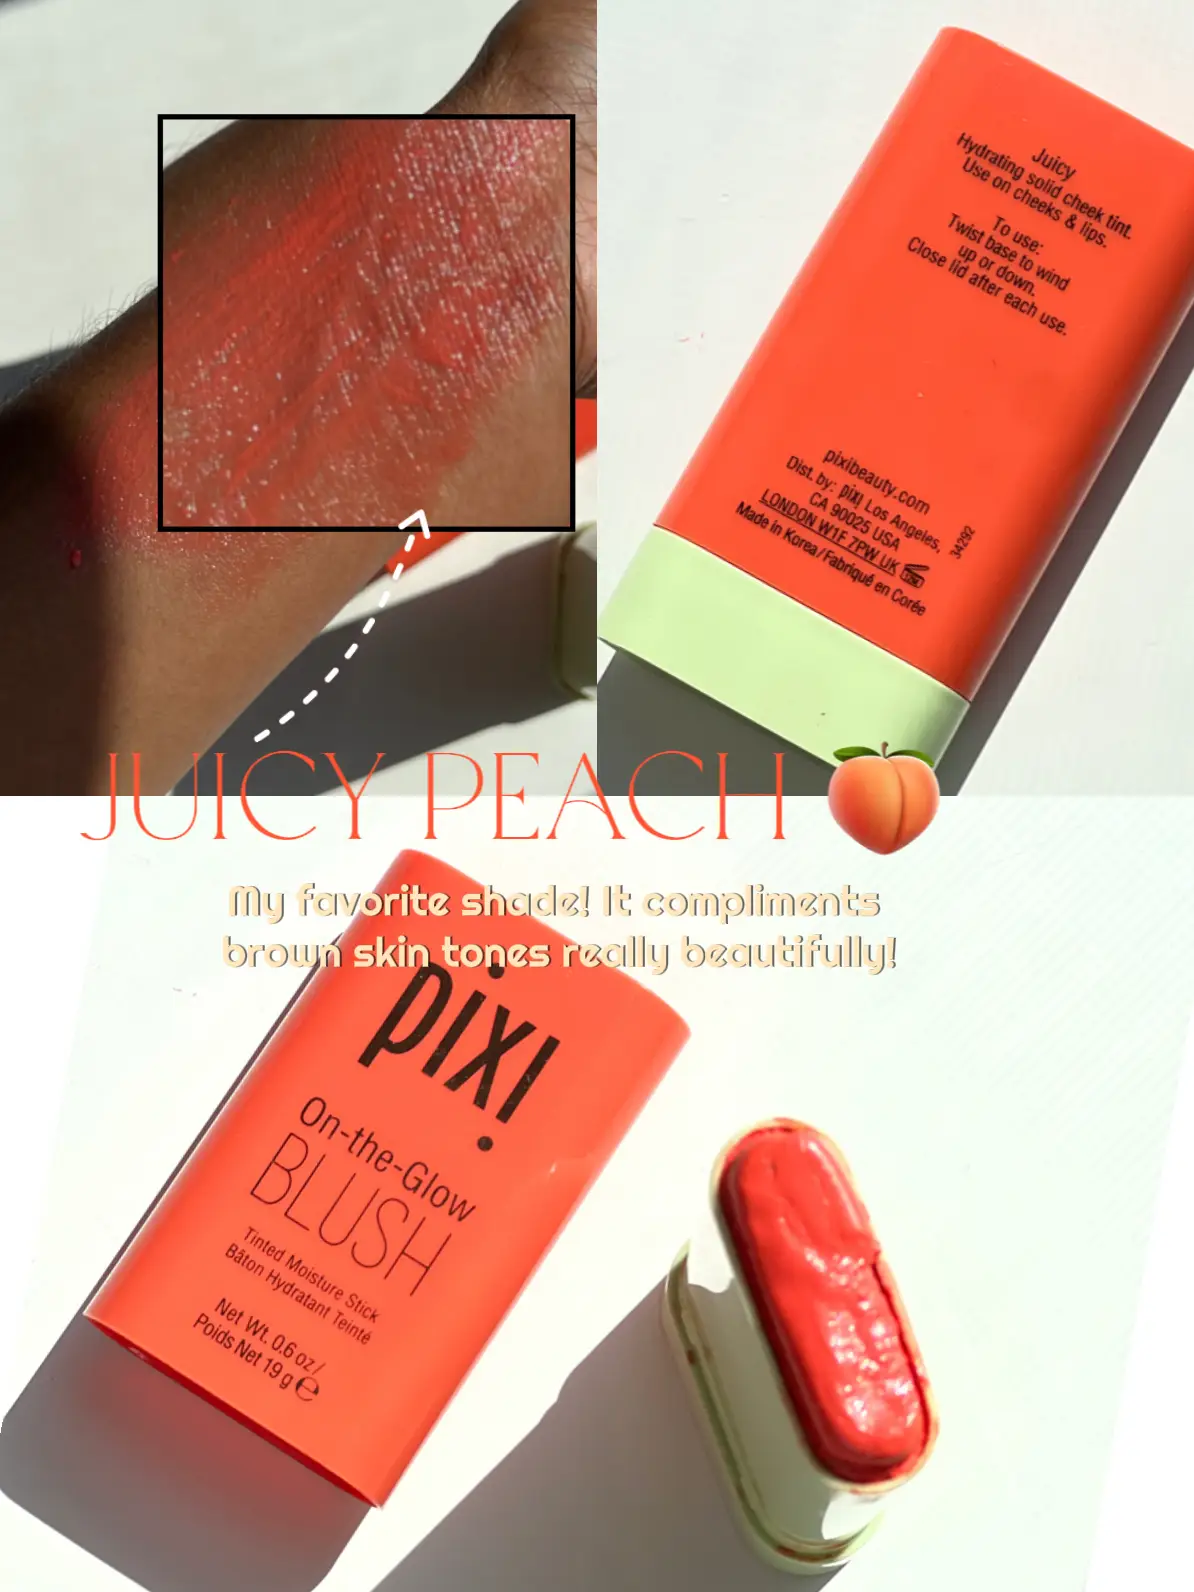 Fresh Face Blush by PIXI BEAUTY, Color, Cheek, Blush